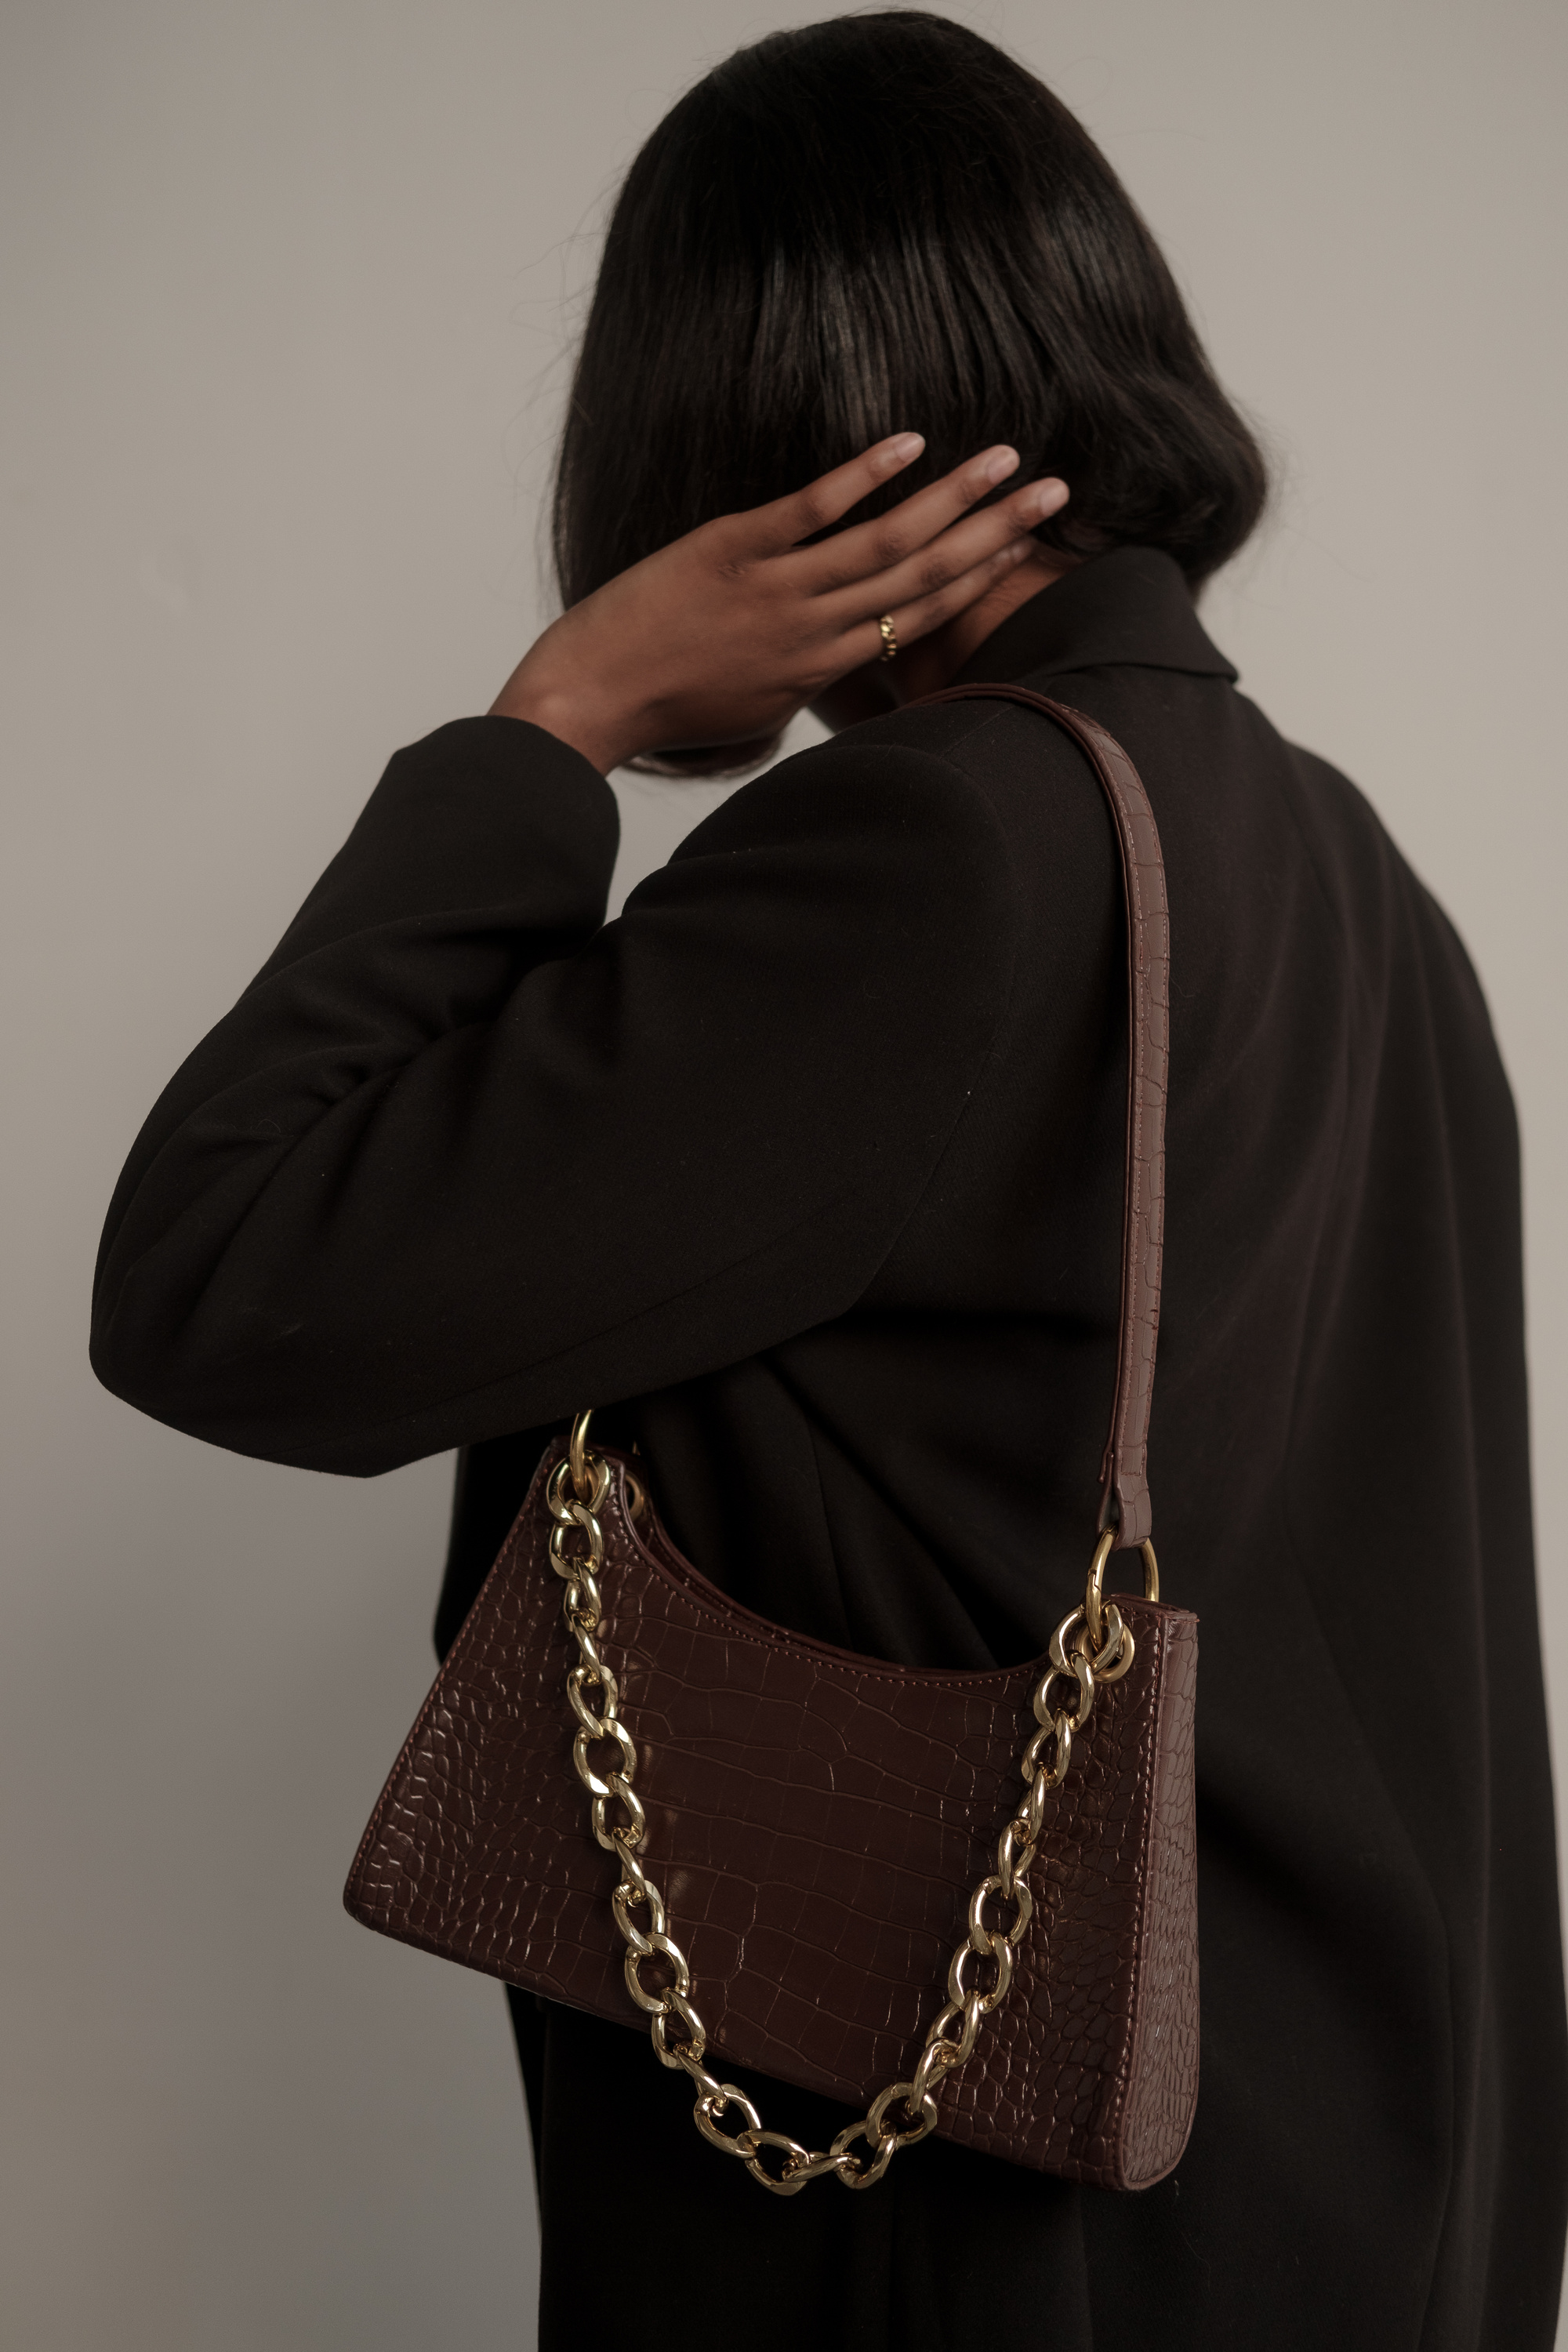 Woman with Black Dress with Handbag